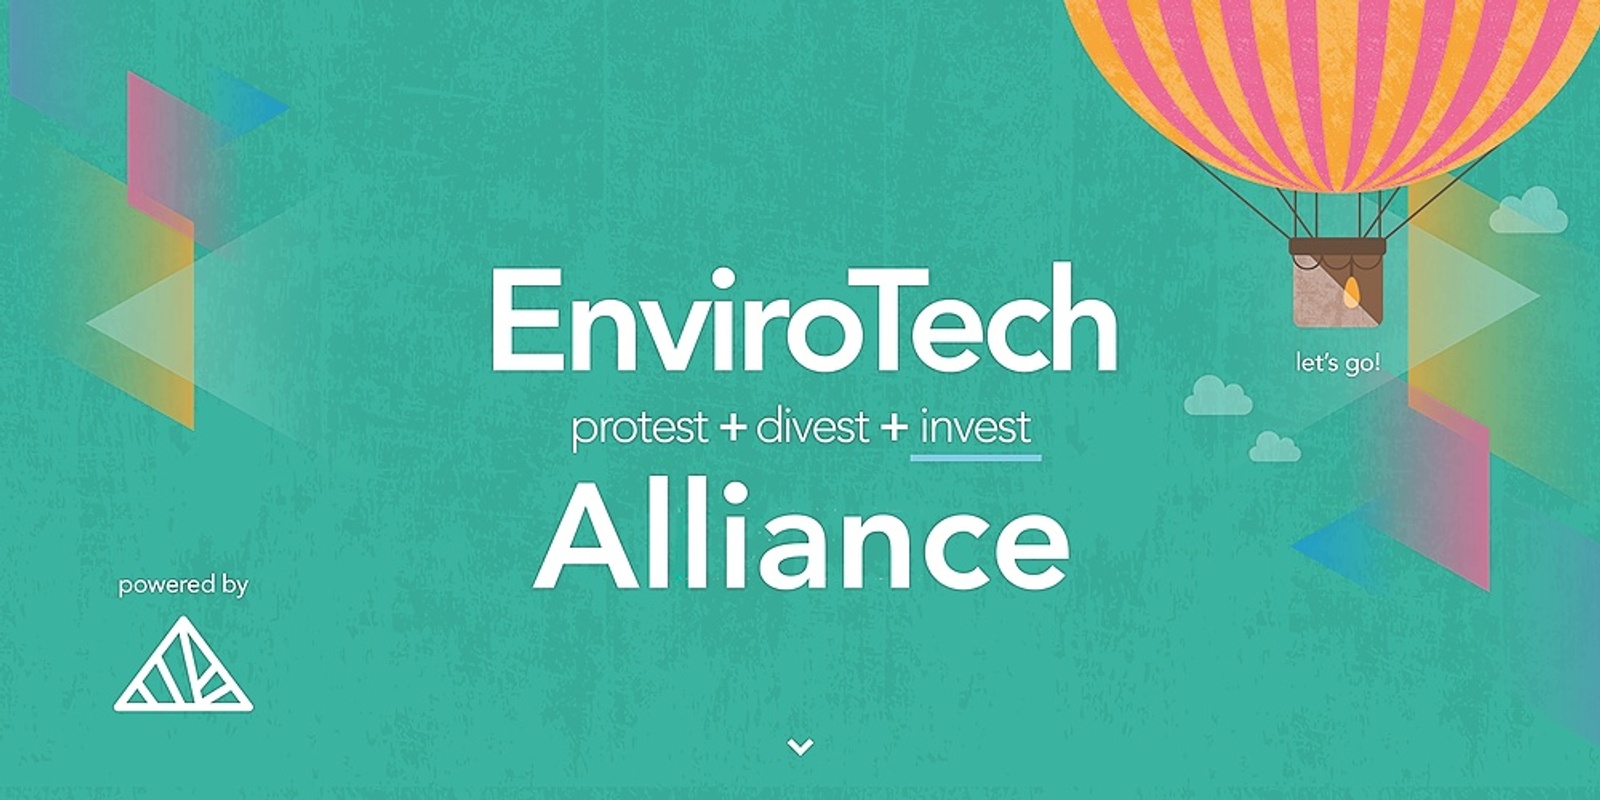 Banner image for POSTPONED - EnviroTech Alliance - First Meetup